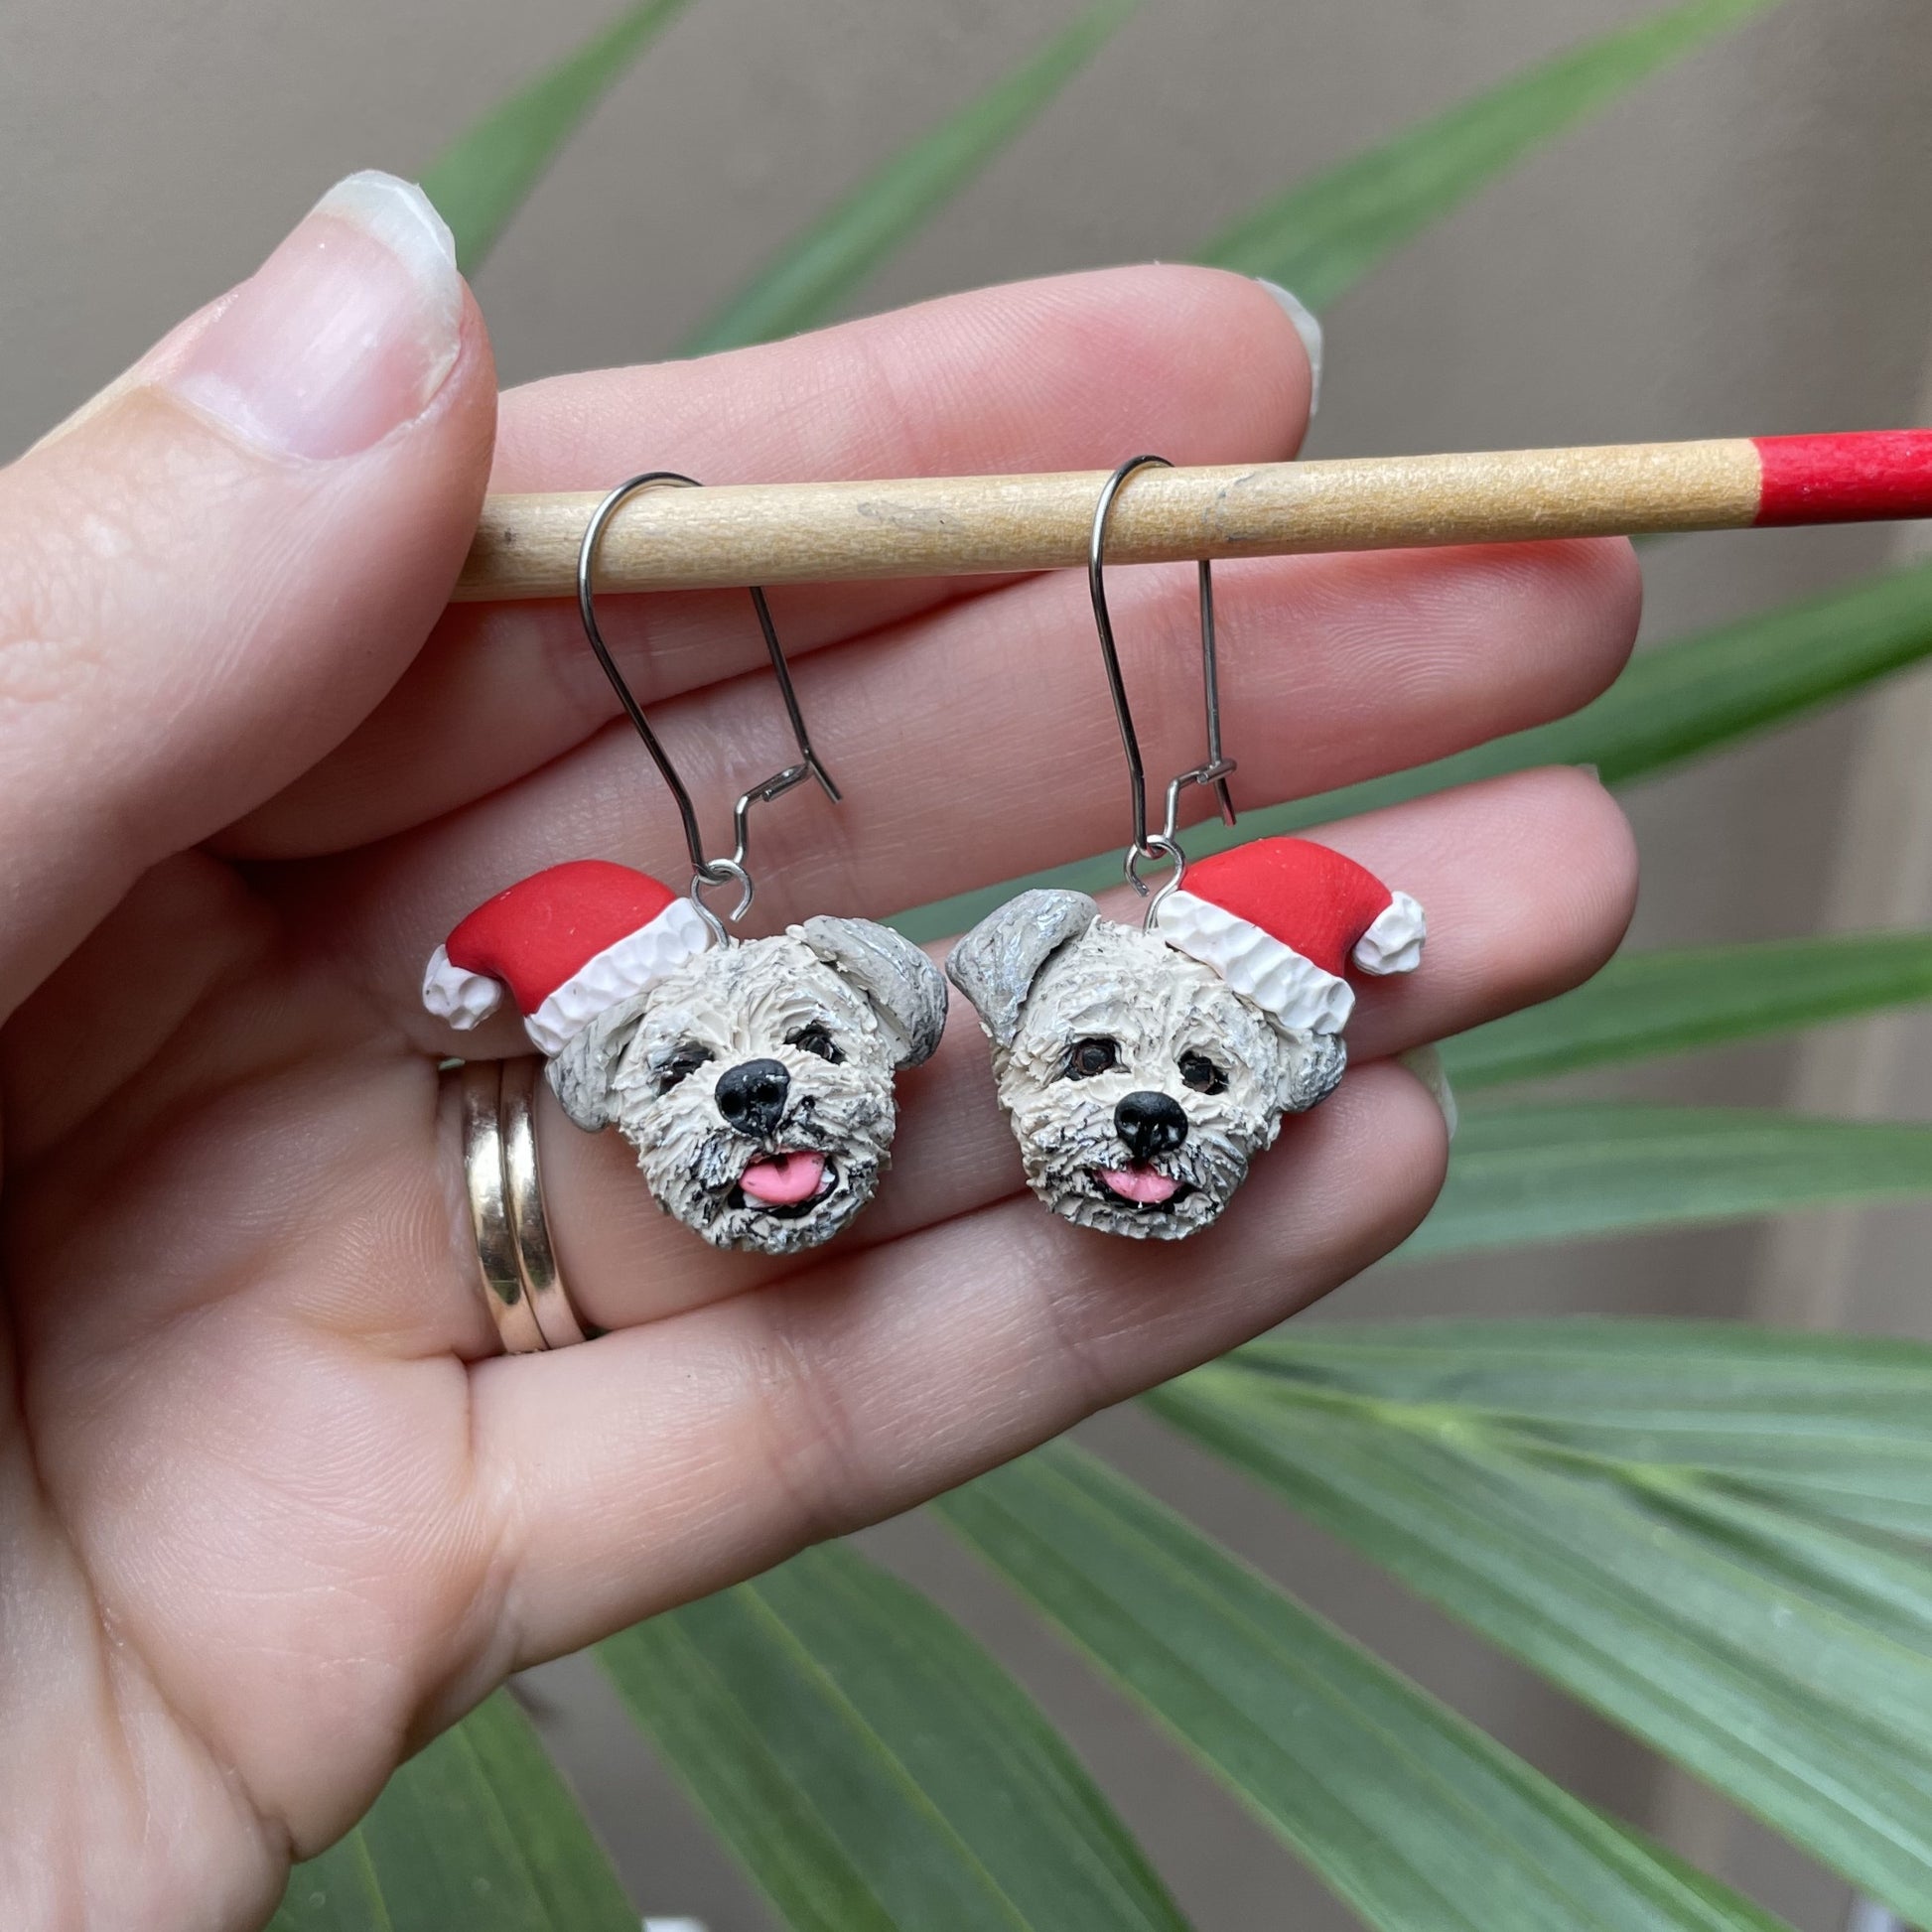 Handmade custom dog dangle earrings wearing santa hats.